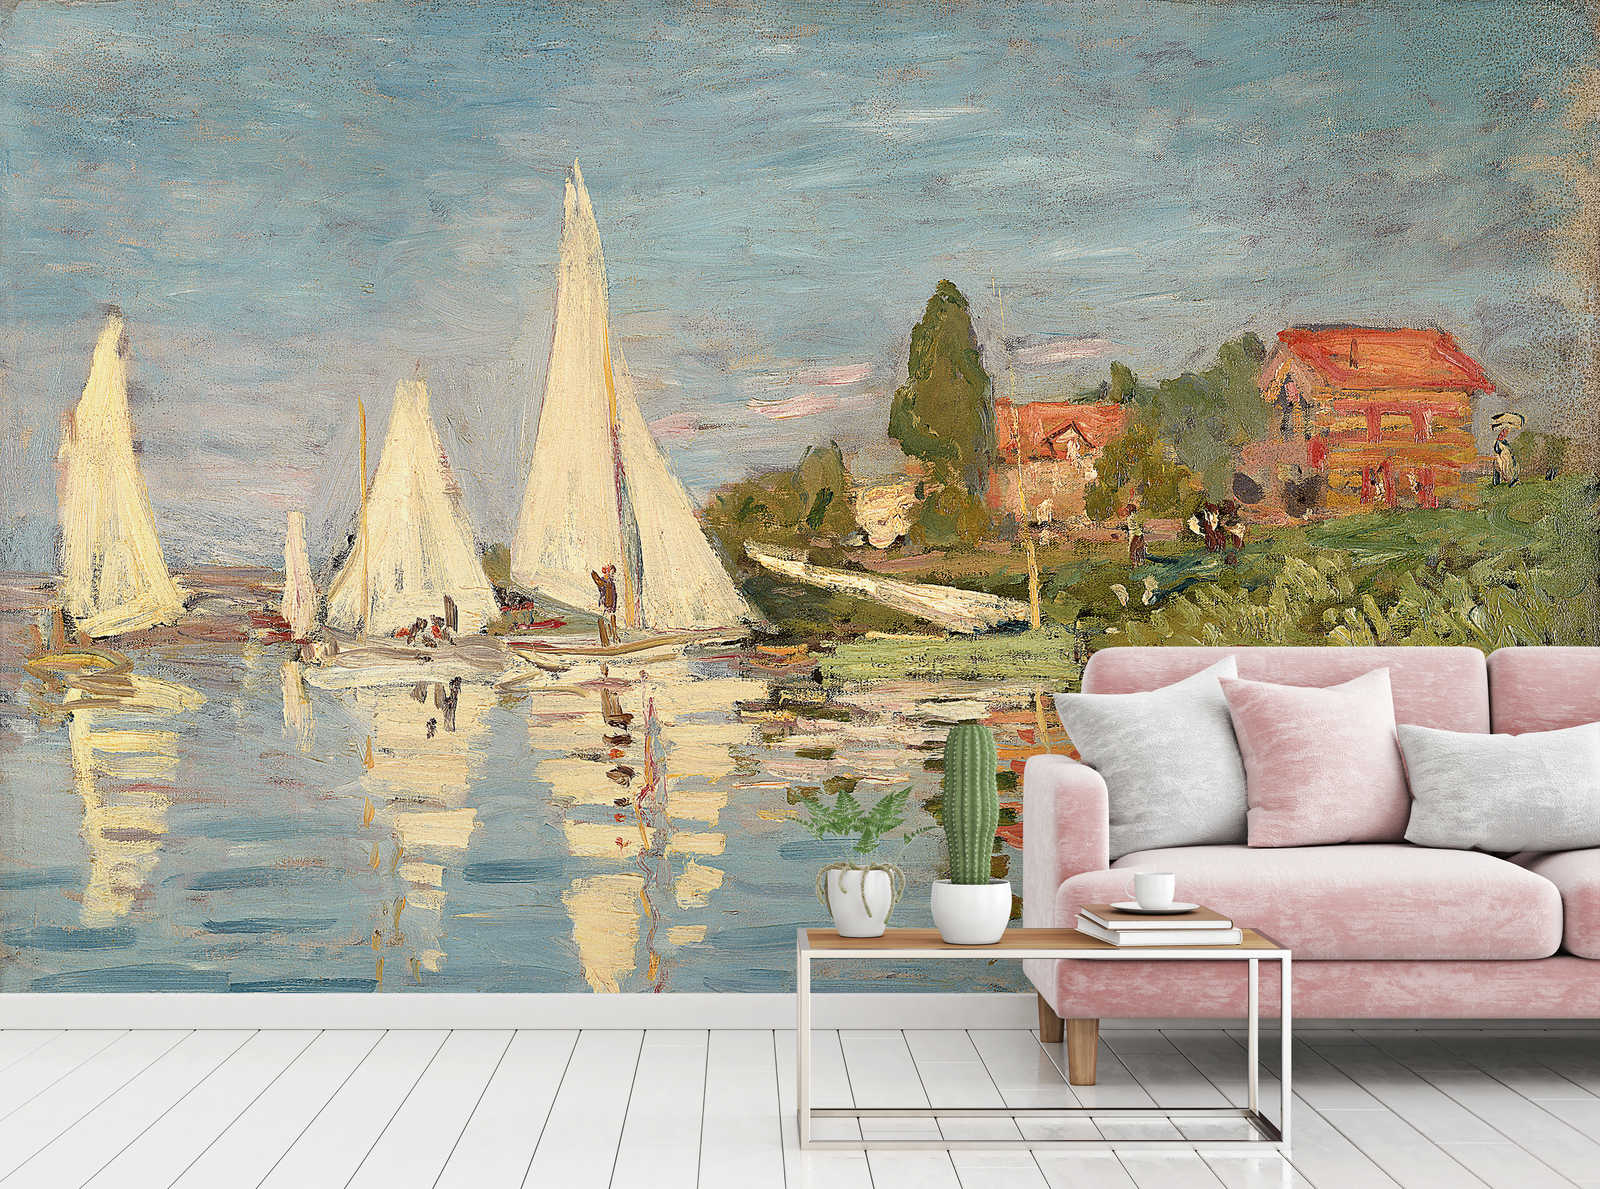             Photo wallpaper "Danae" by Claude Monet
        